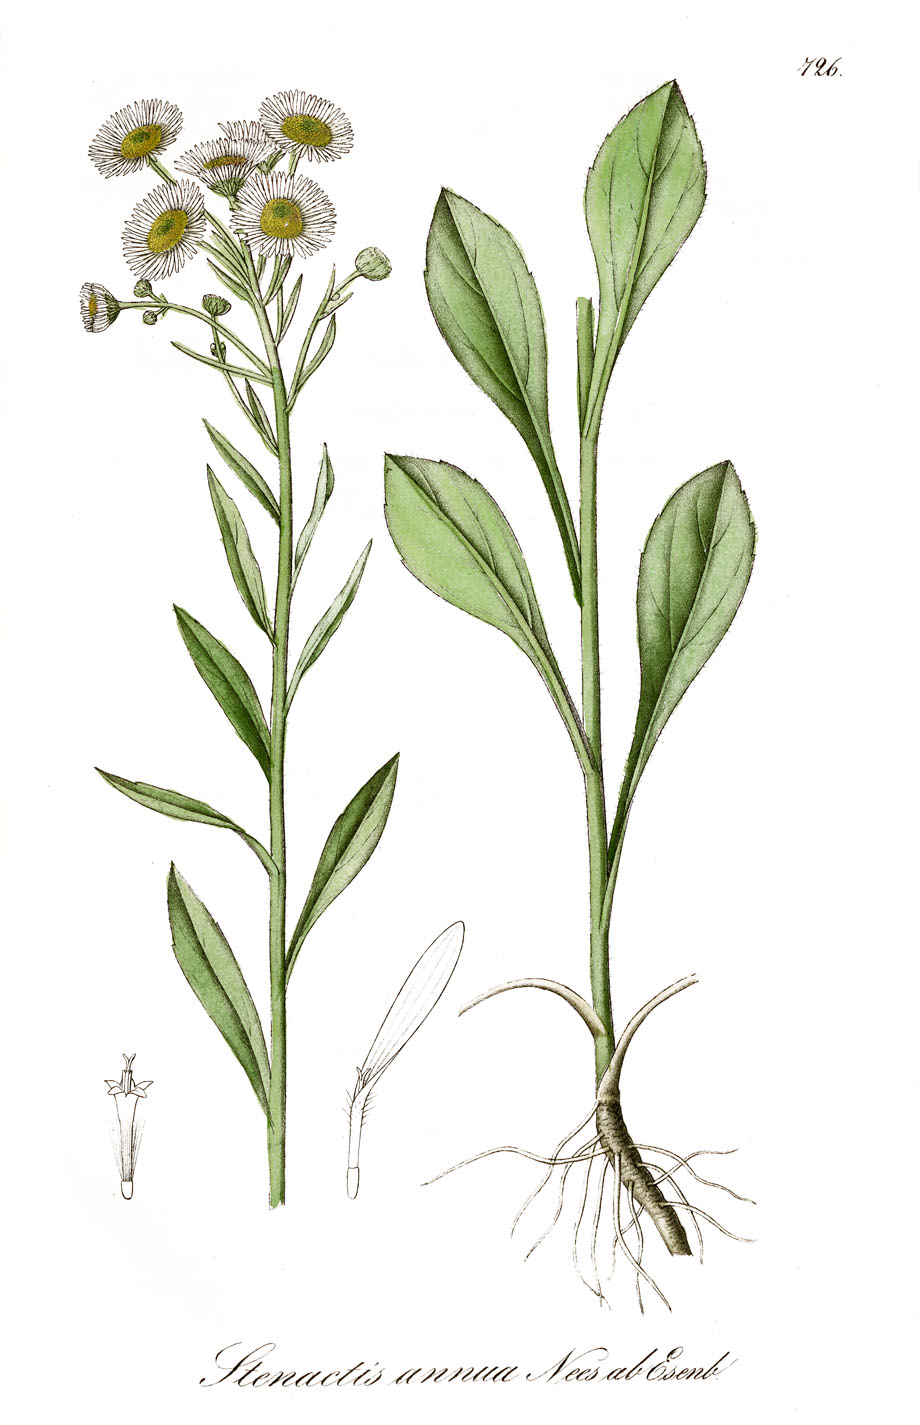 Eigeron annuus, A. Dietrich, Flora regni Borussici.